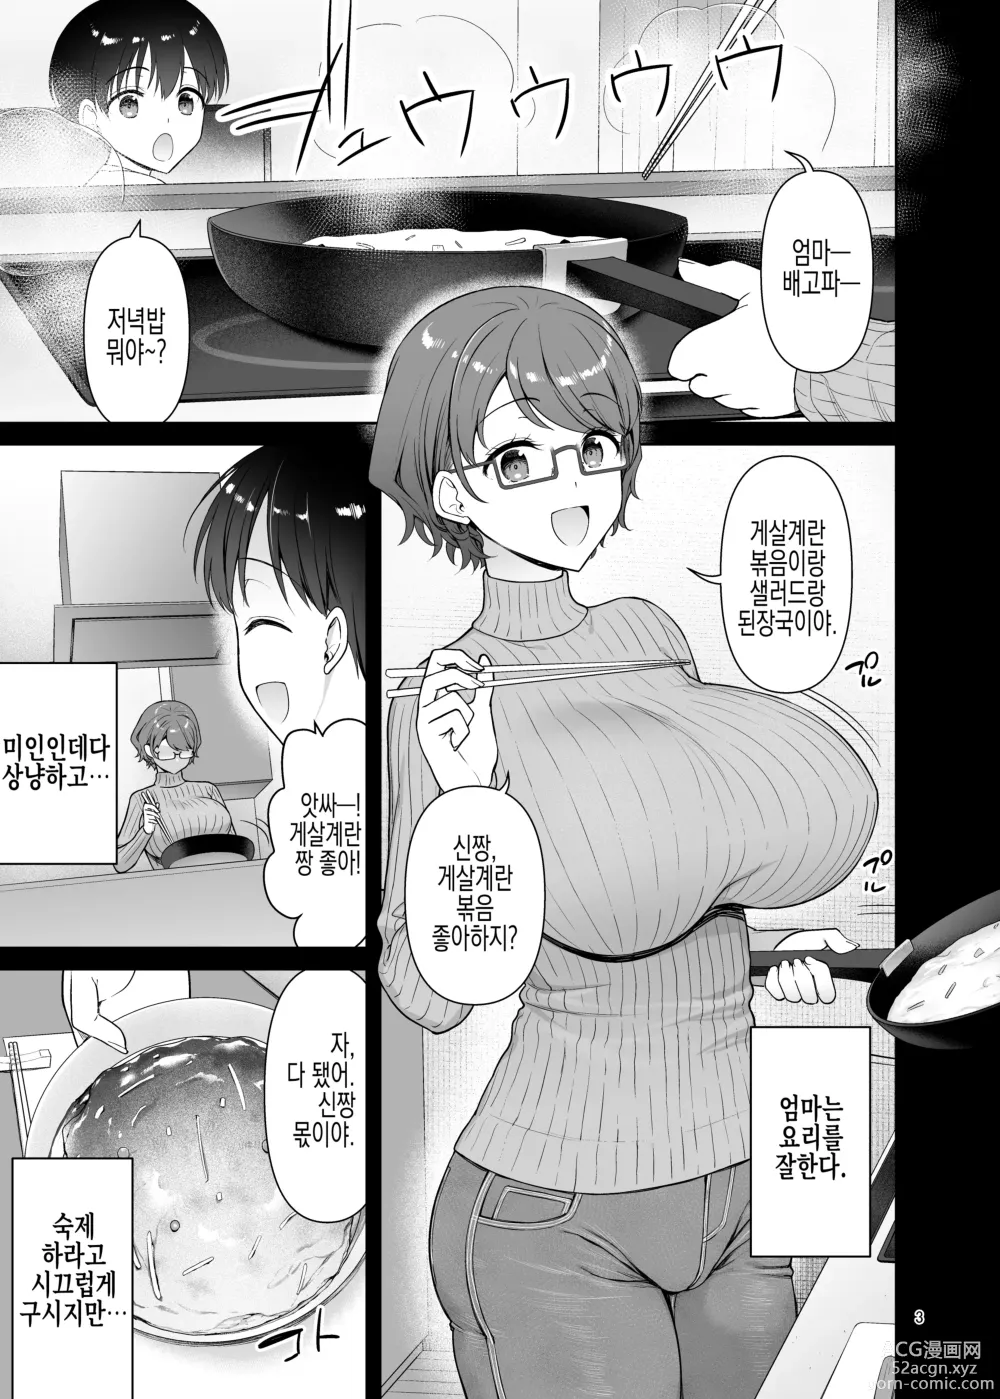 Page 4 of doujinshi 엄마는 동생 앞에서만 개변태가 된다